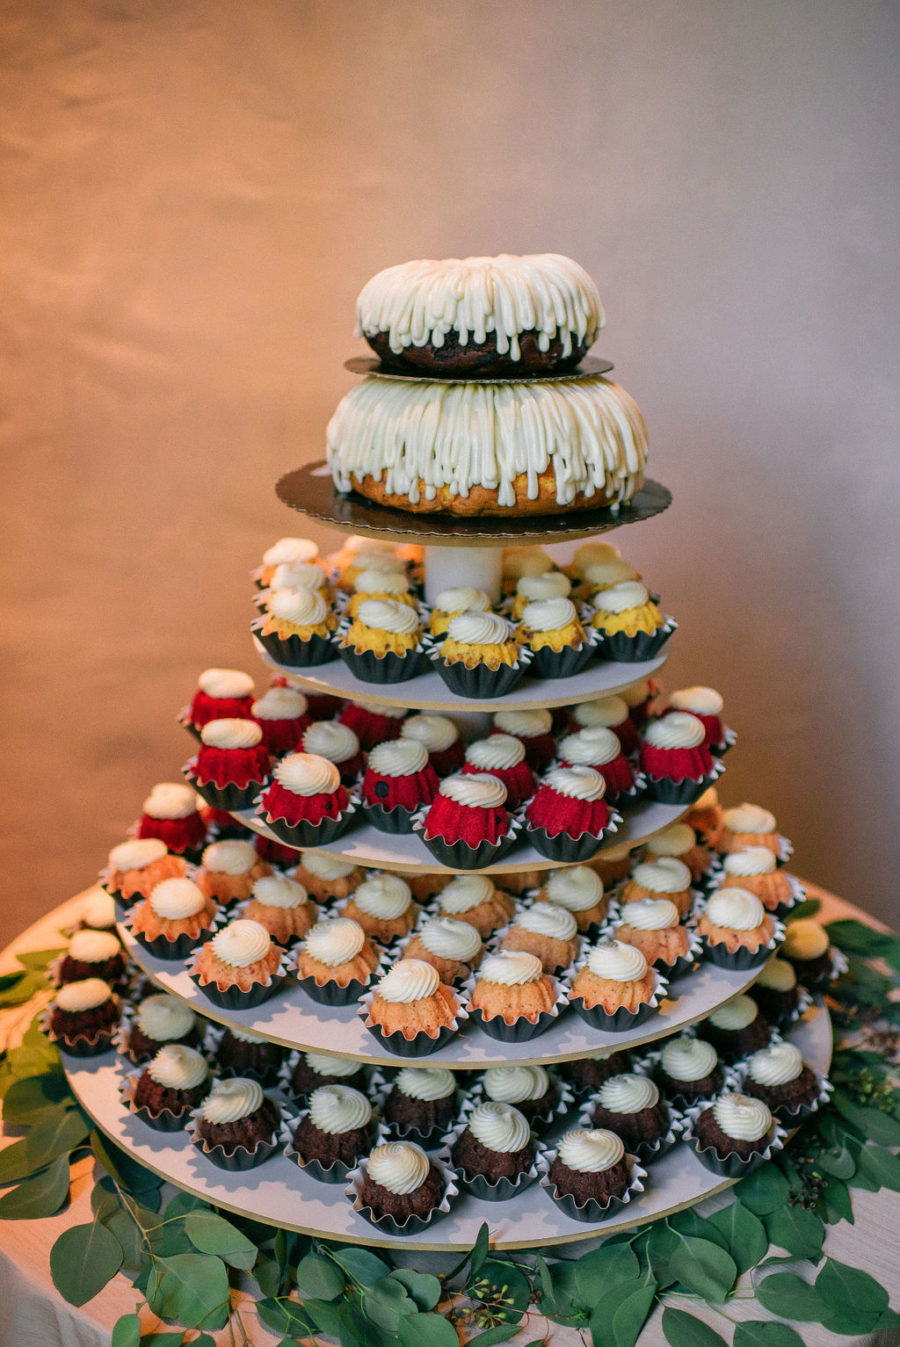 Nothing Bundt cakes wedding cake for Nashville wedding featured on Nashville Bride Guide